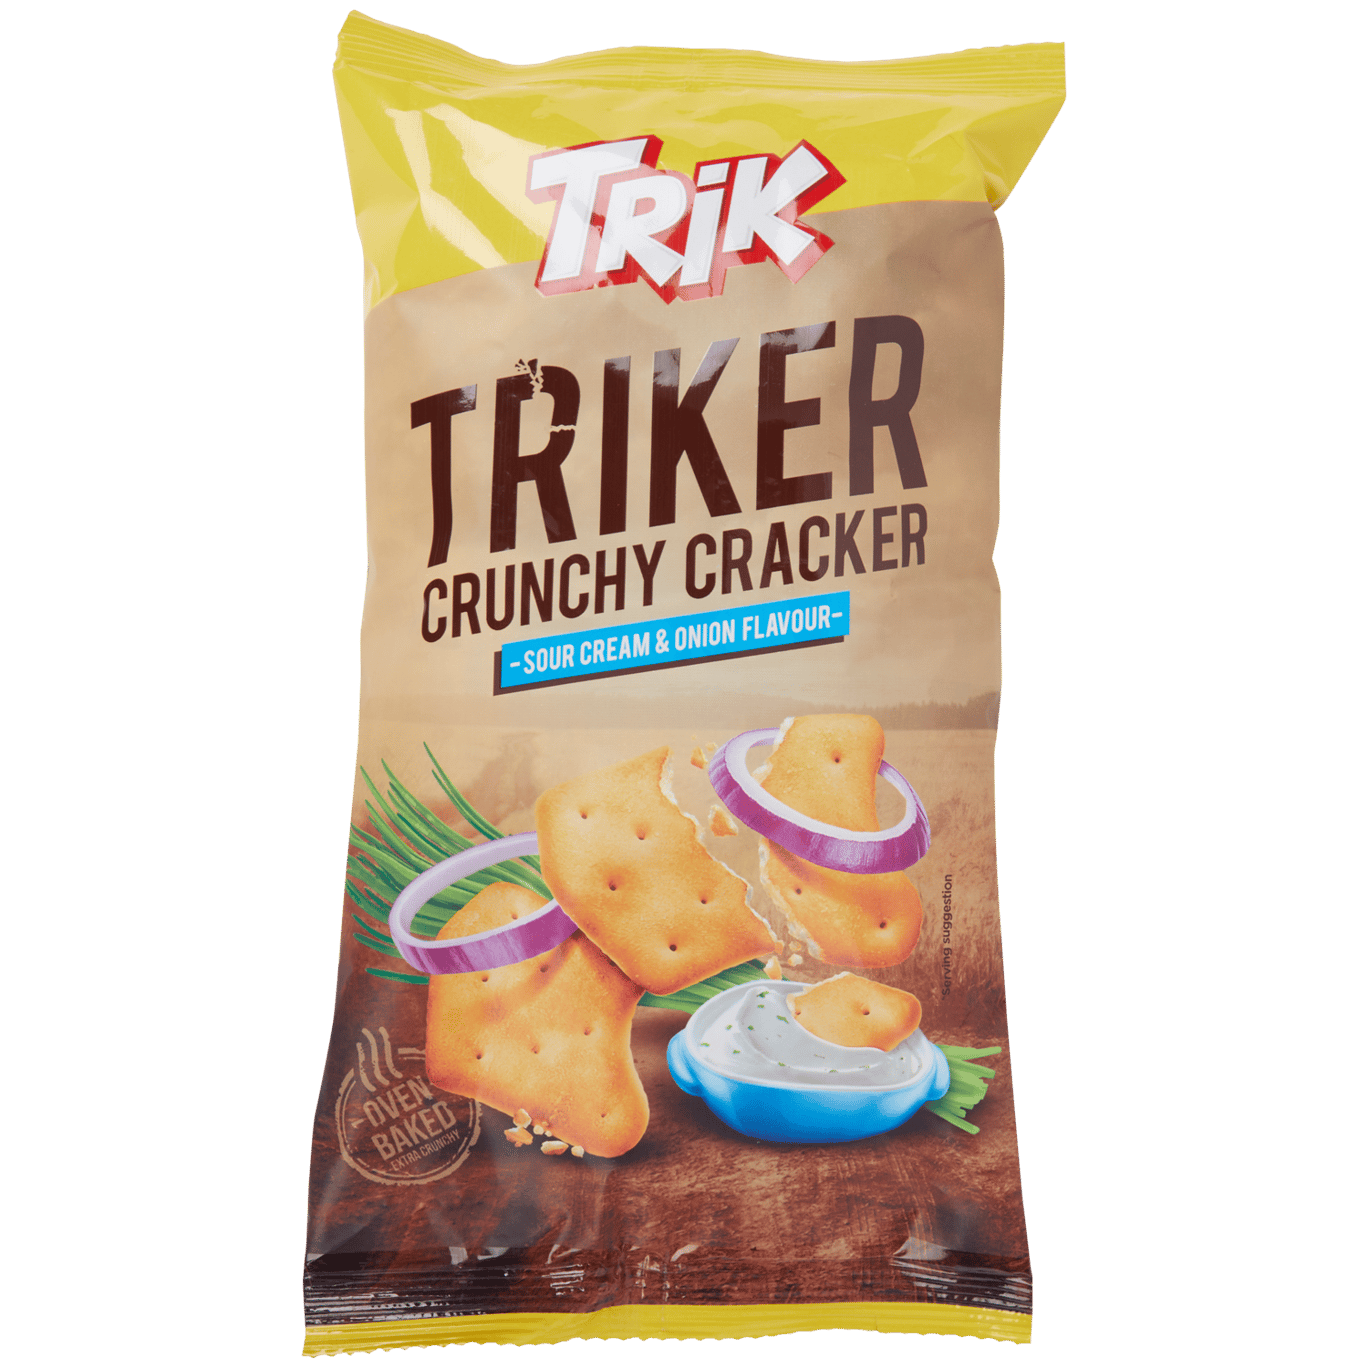 Triker Crunchy Cracker Trik